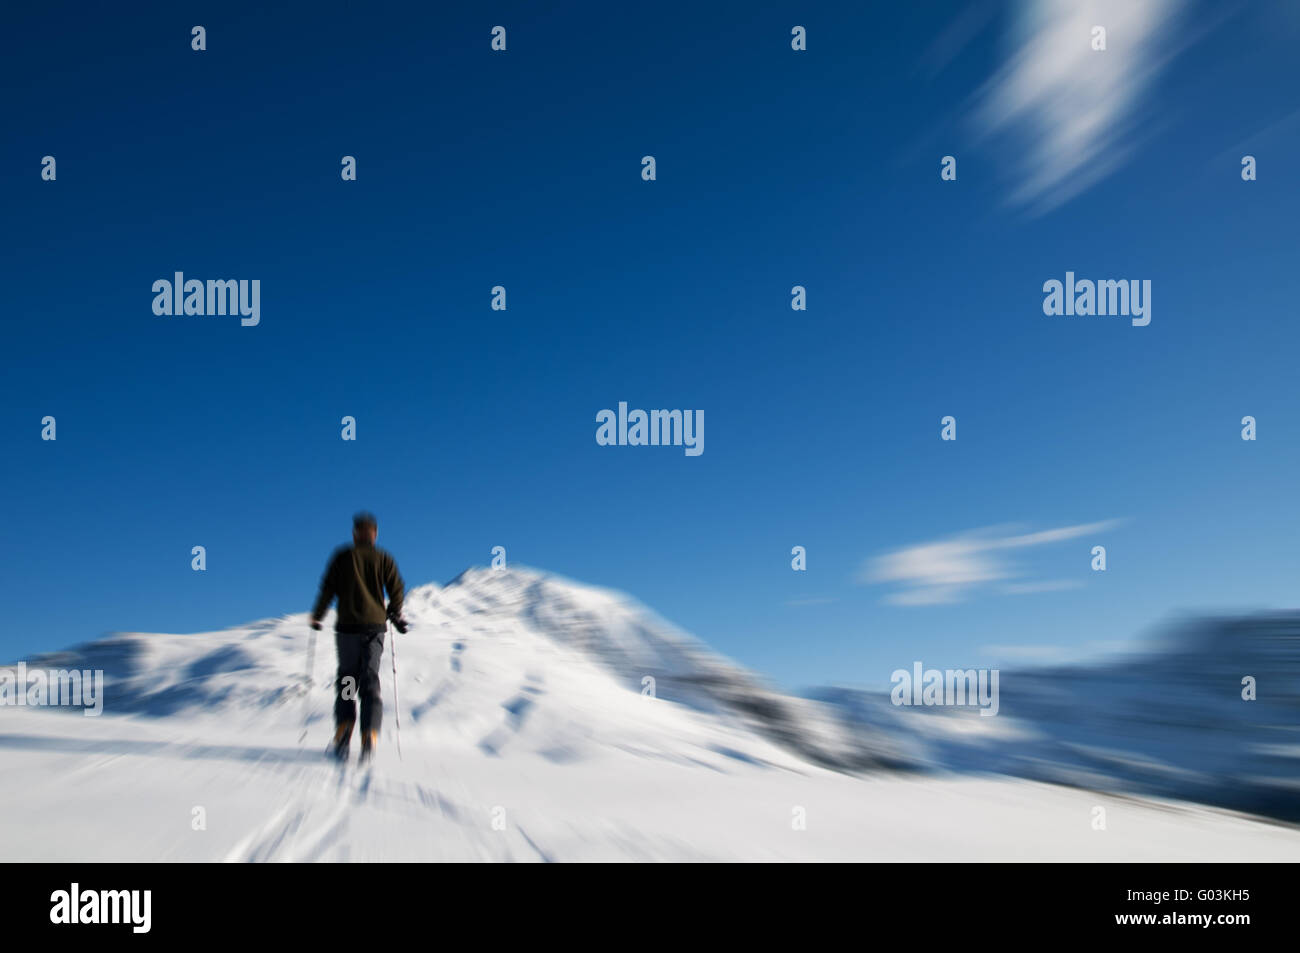 Winter sports - mountain climbing. Motion blurred Stock Photo